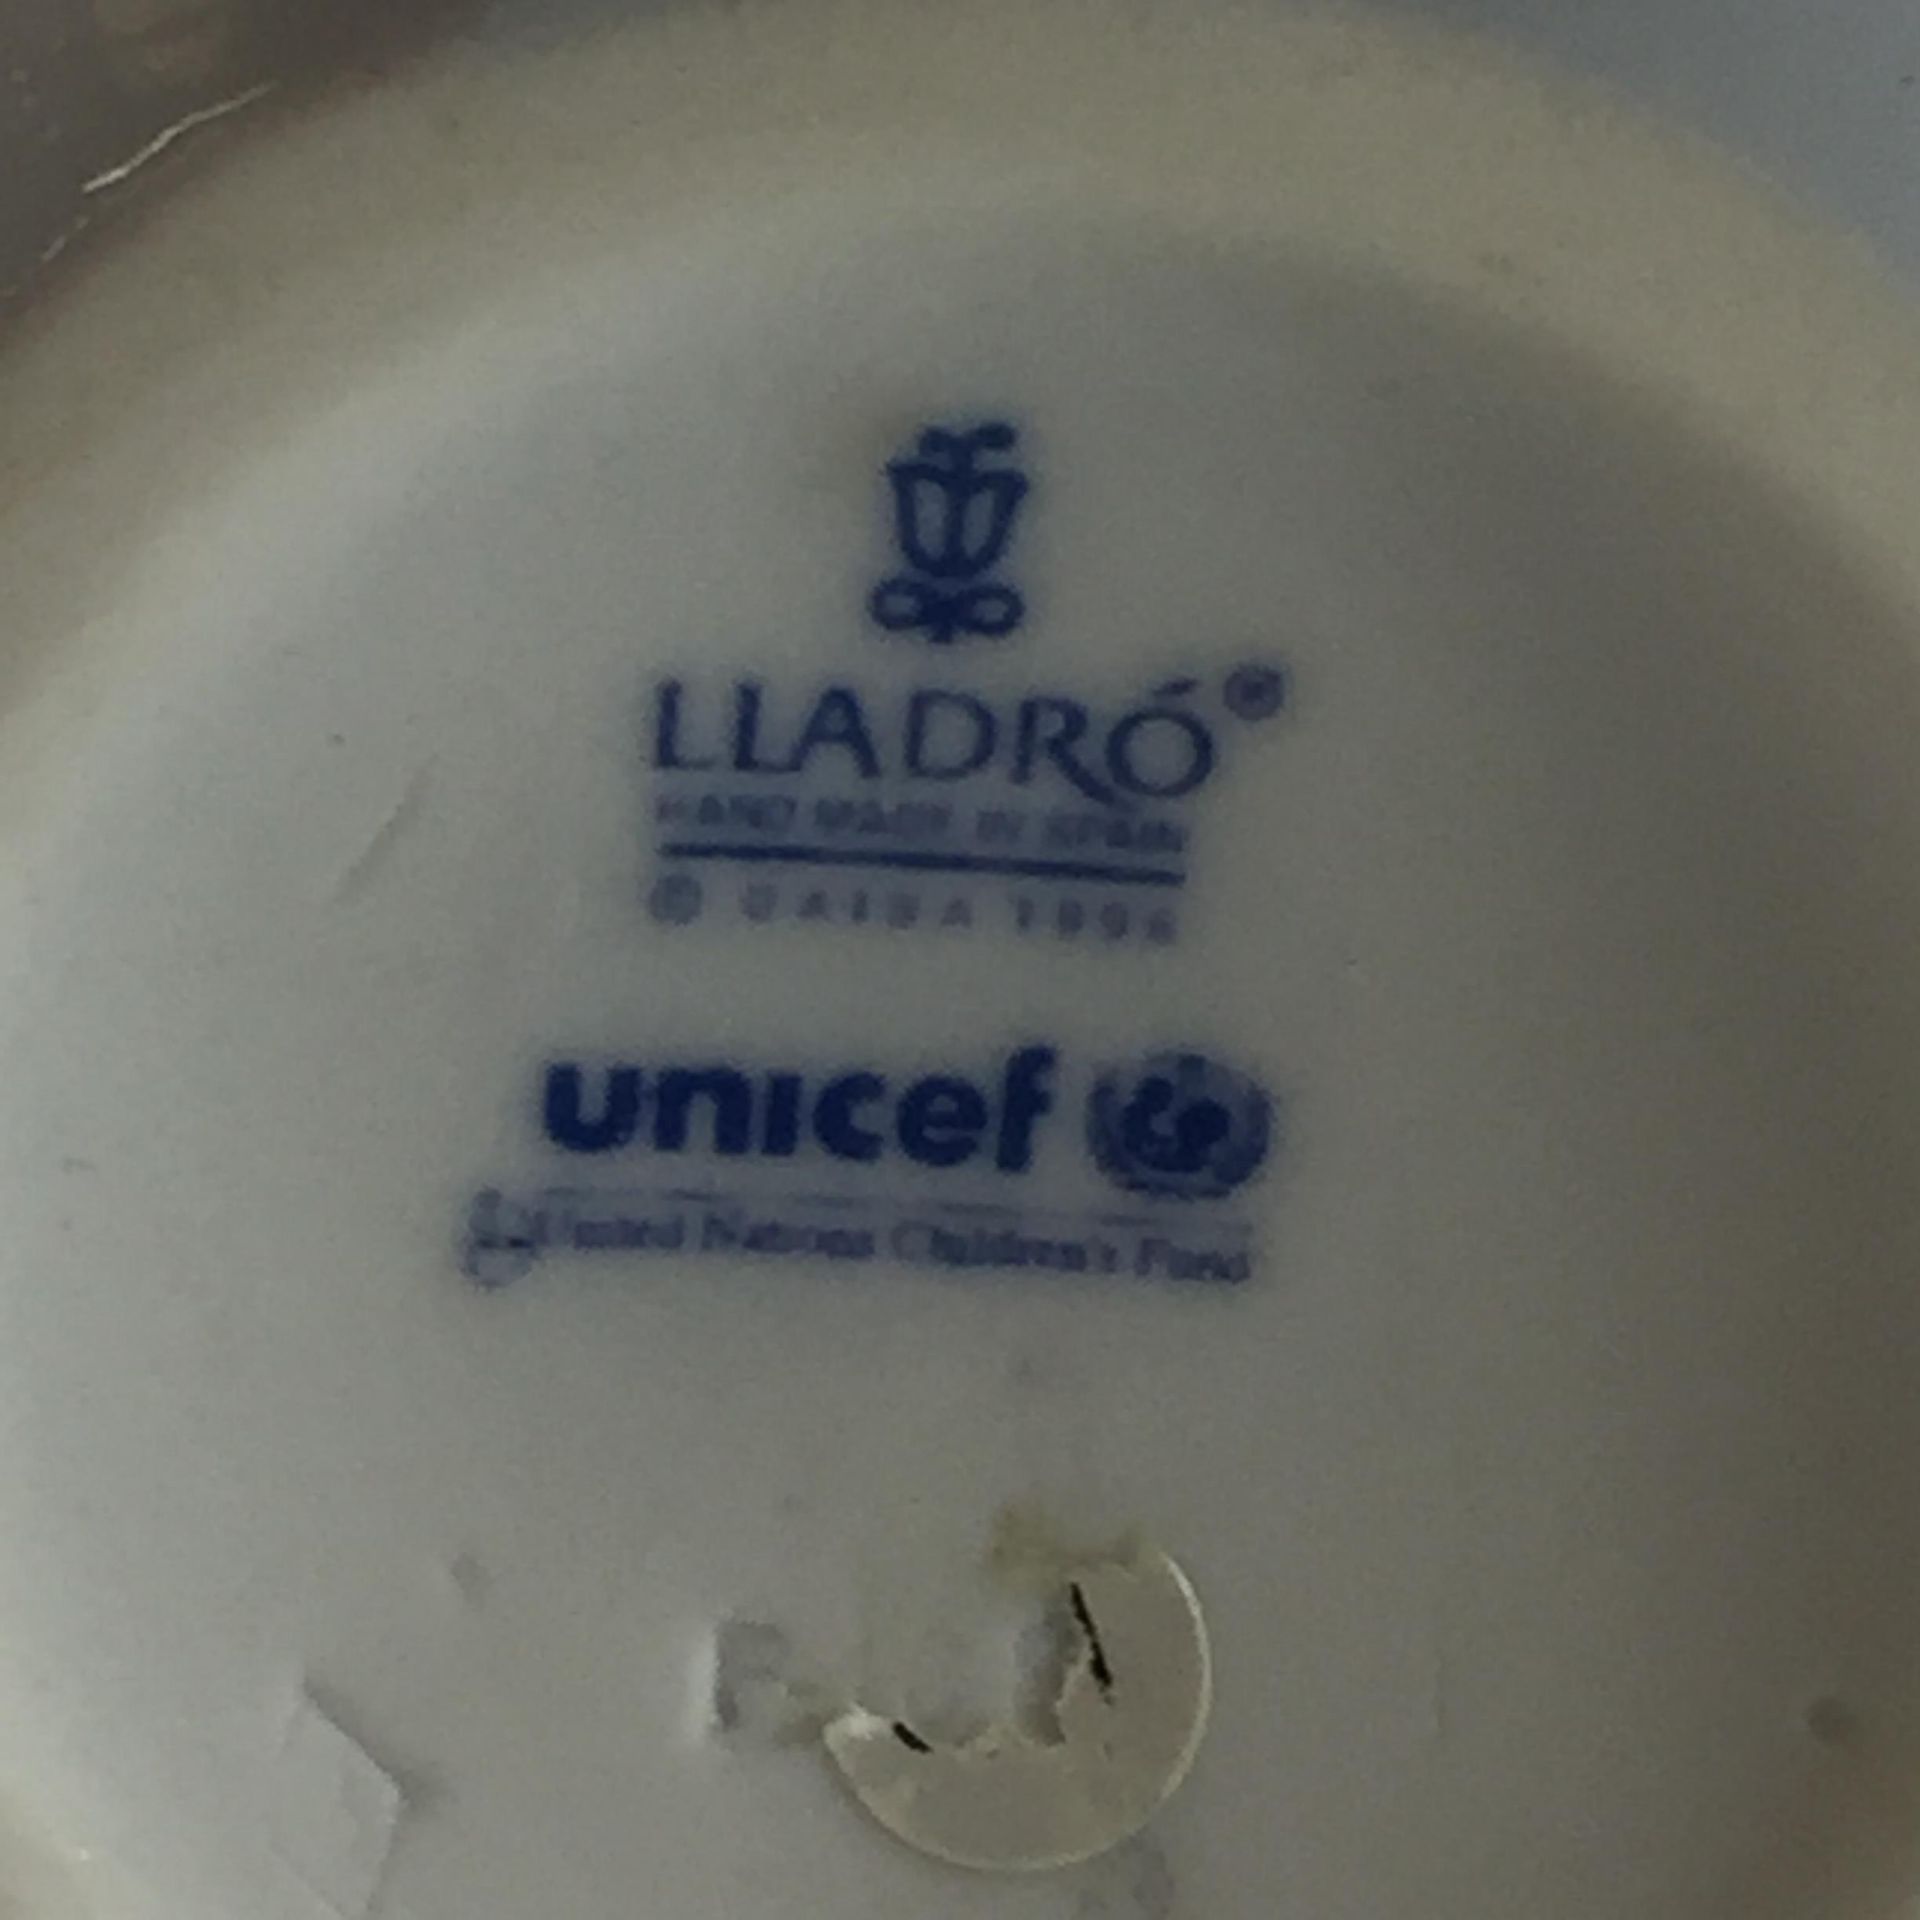 A LLADRO UNICEF GLOBE FIGURE ON DISPLAY BASE - A/F - Image 5 of 5